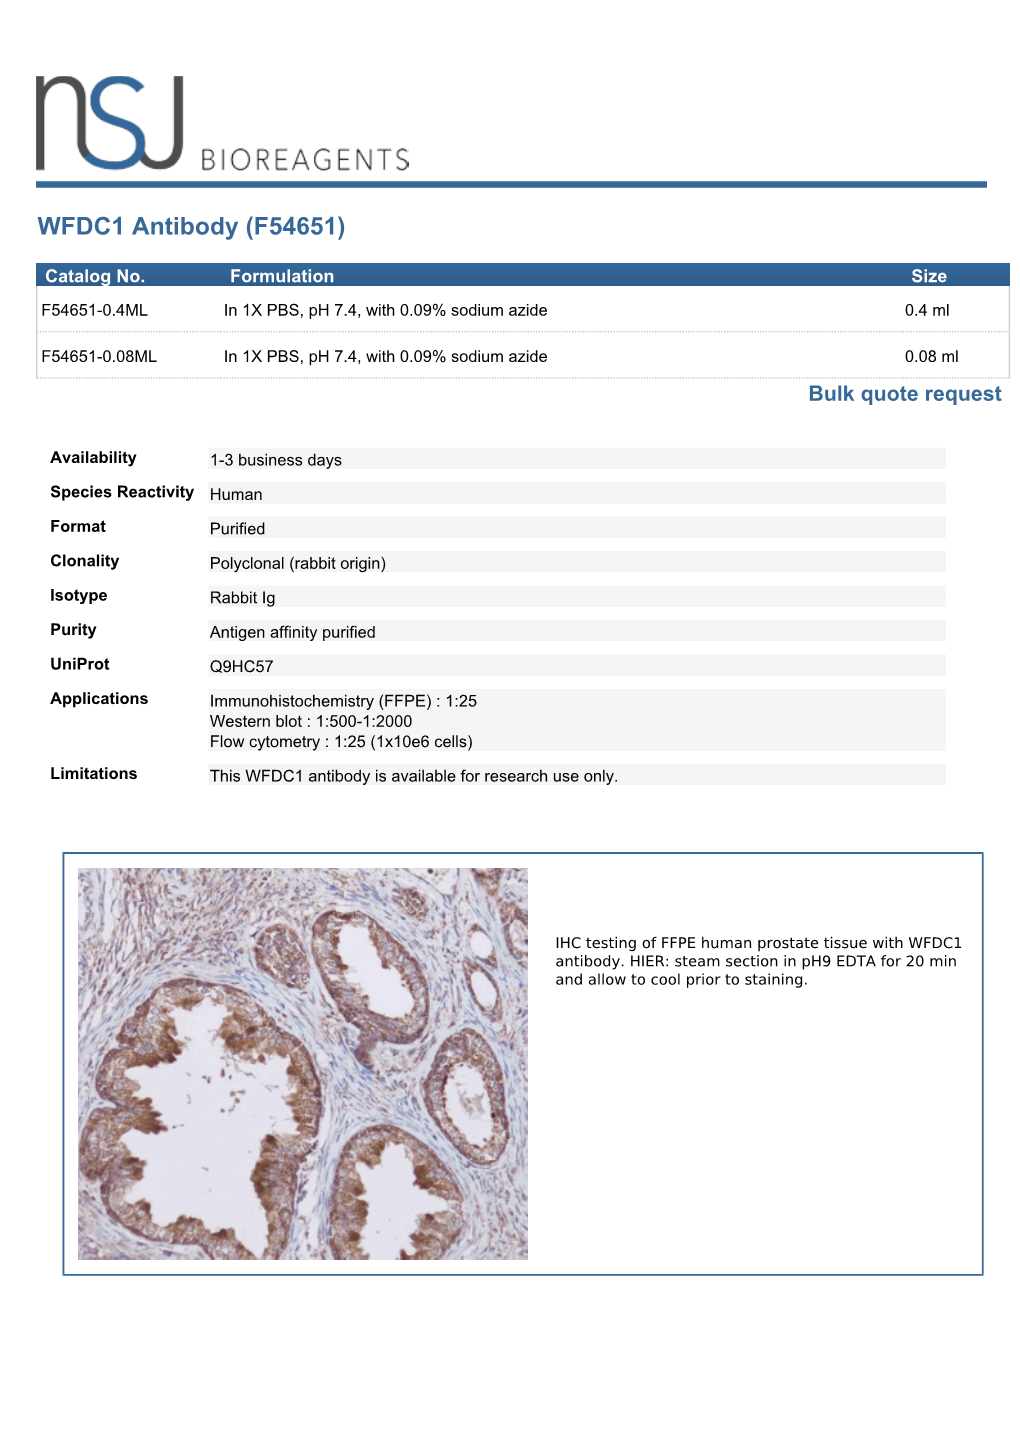 WFDC1 Antibody (F54651)